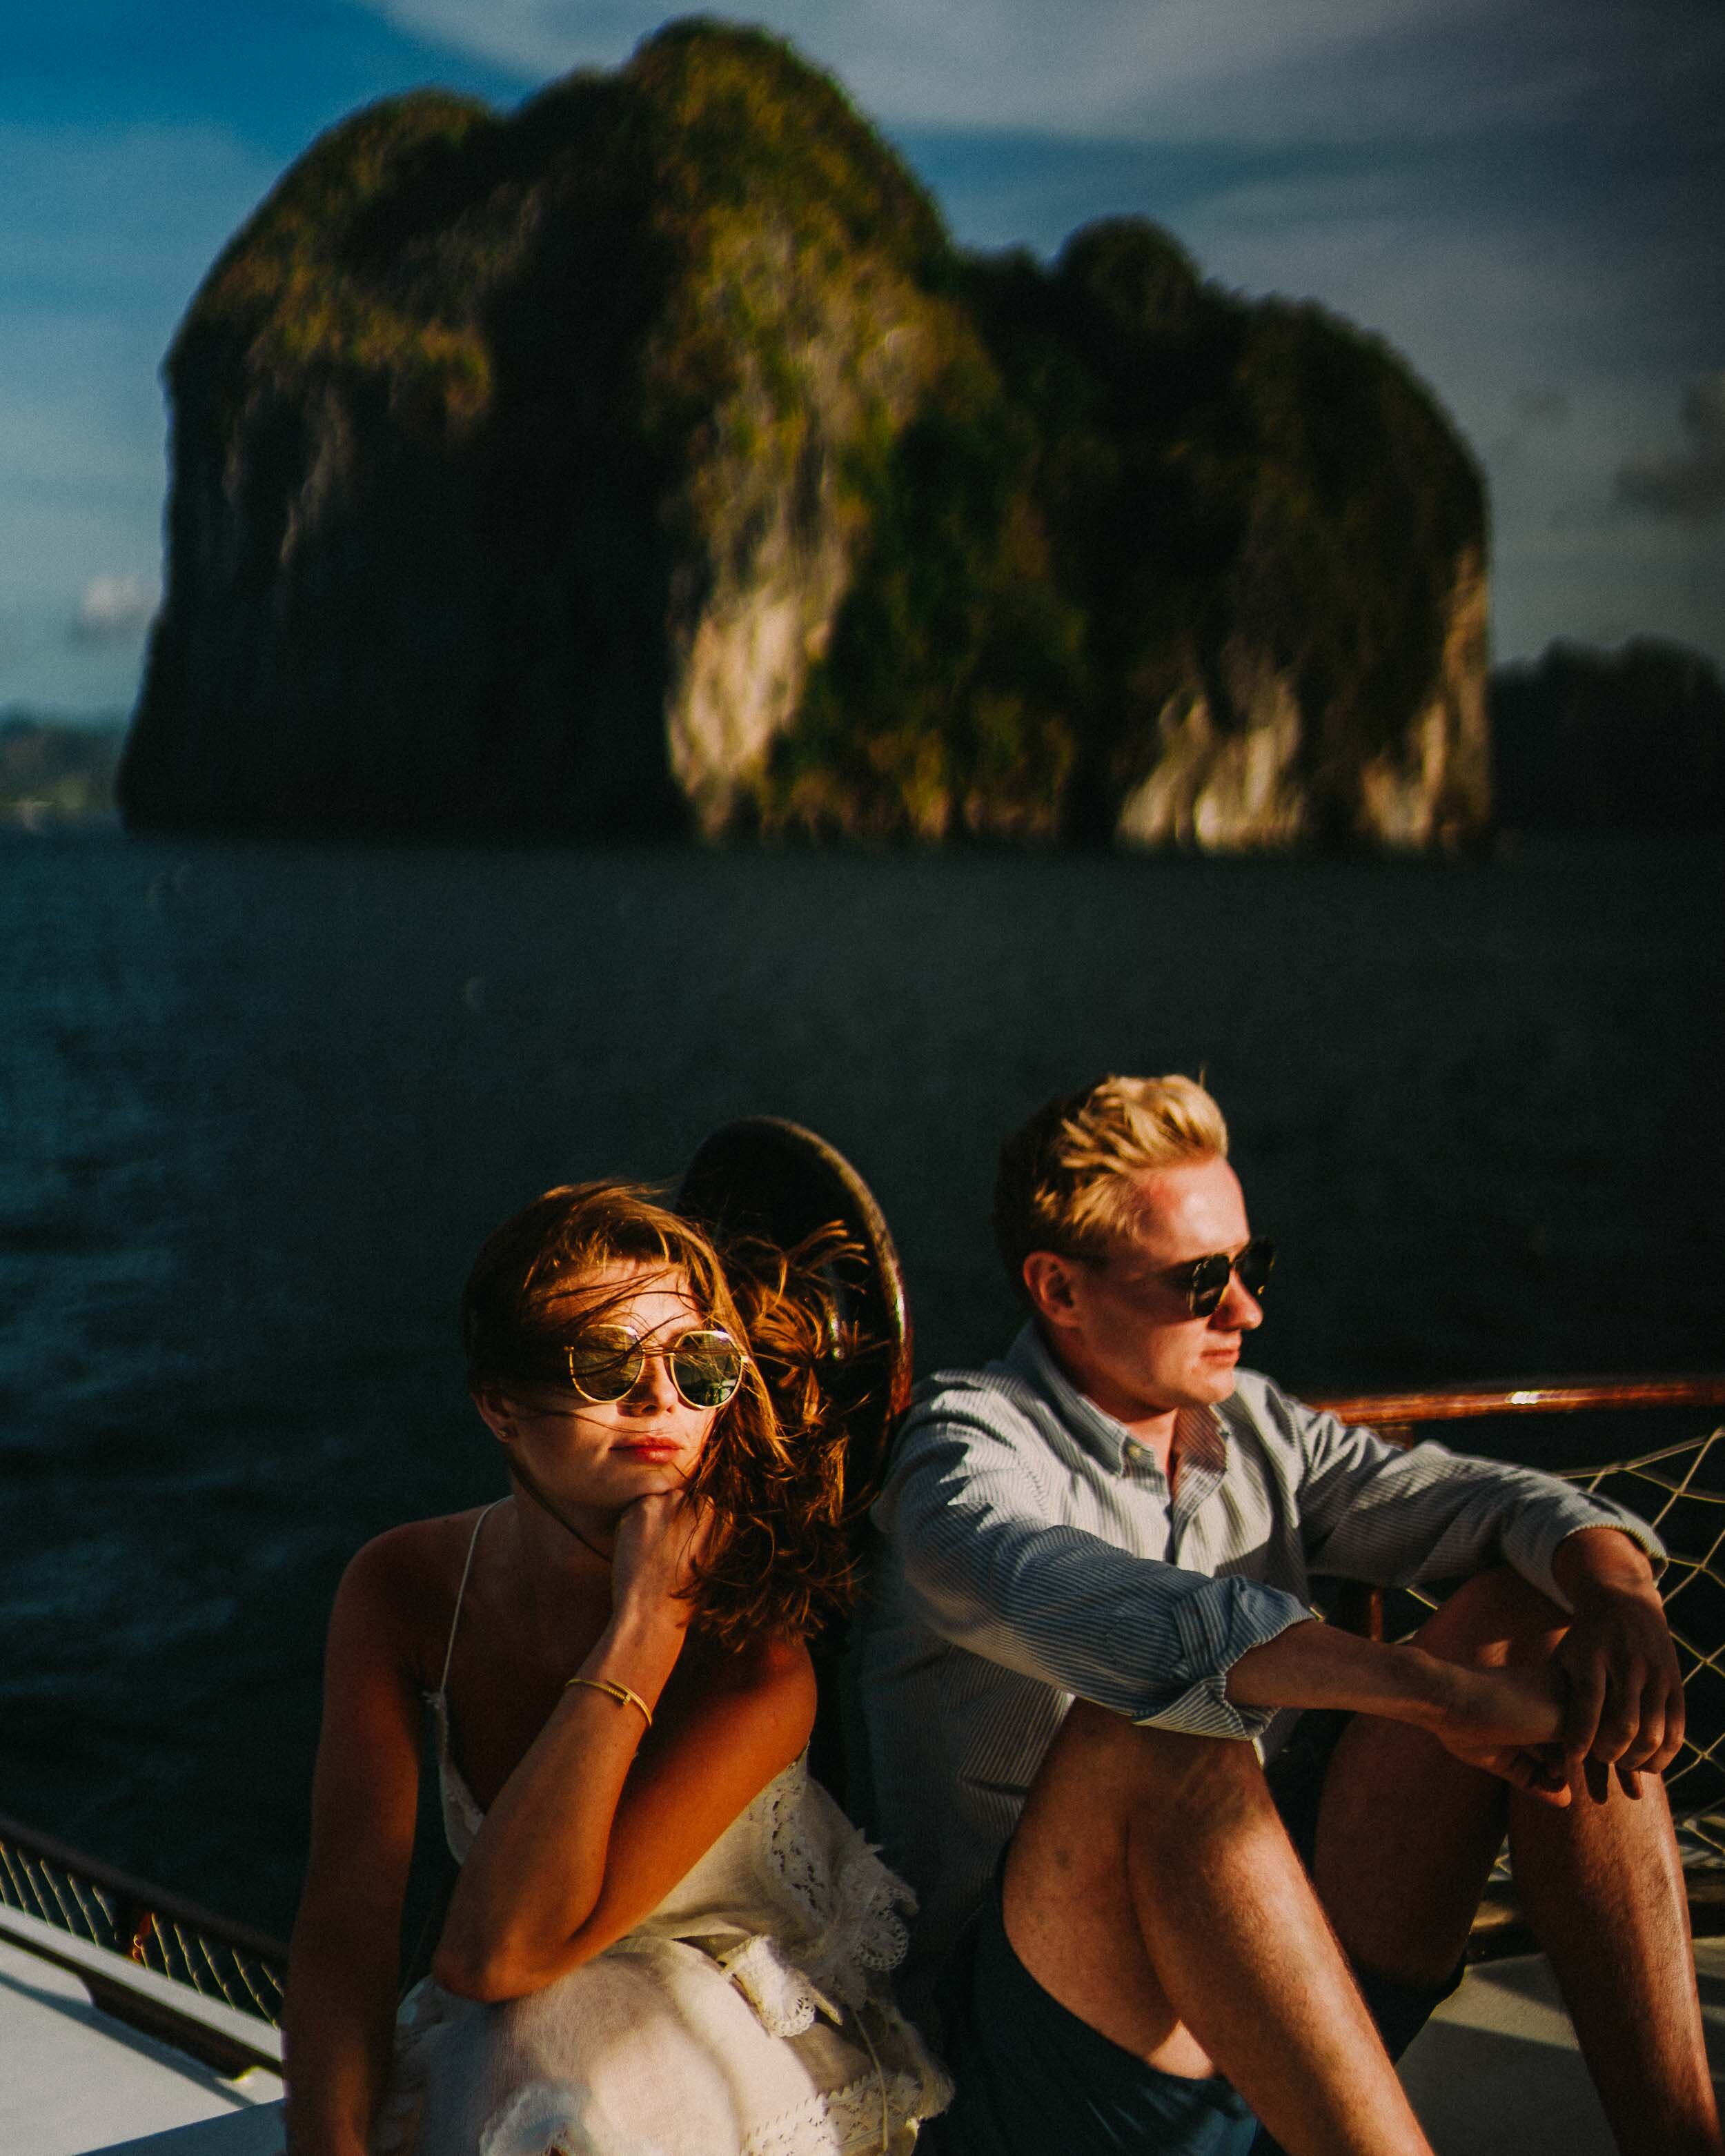 13 El Nido Philippines Couple Photography An island hopping honeymoon shoot in Palawan. March 2020. Travel couple photos in Southeast Asia x @hejguj.jpg